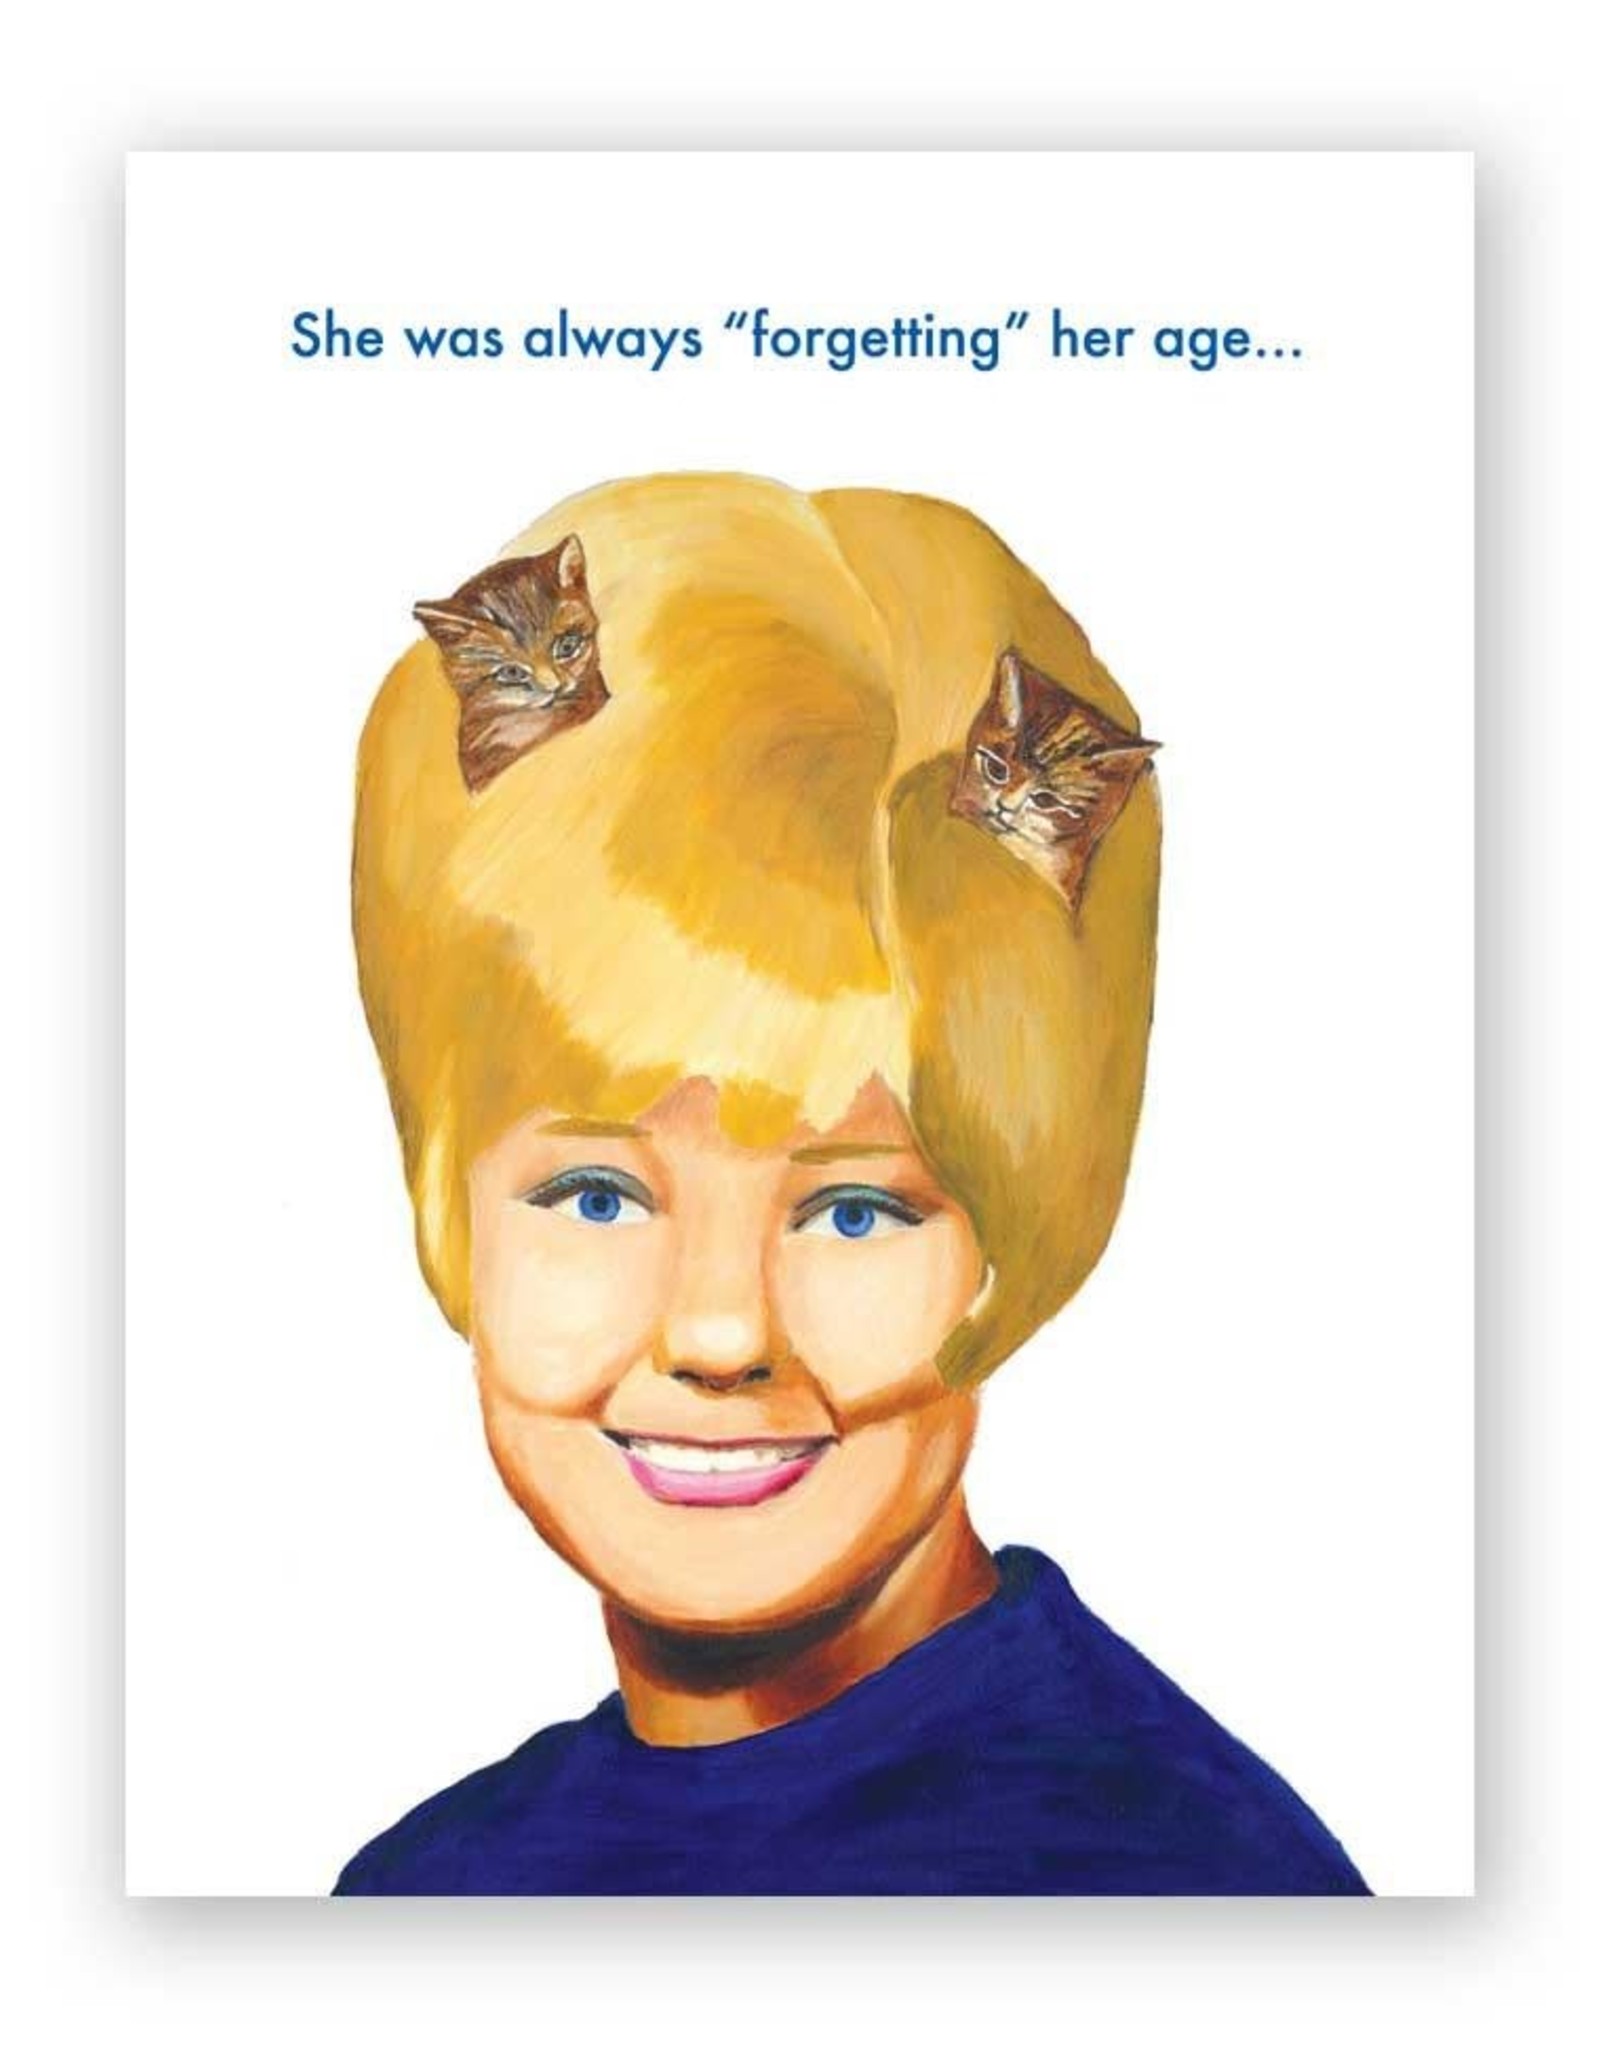 Mincing Mockingbird "Always Forgetting Her Age" Greeting Card - The Mincing Mockingbird